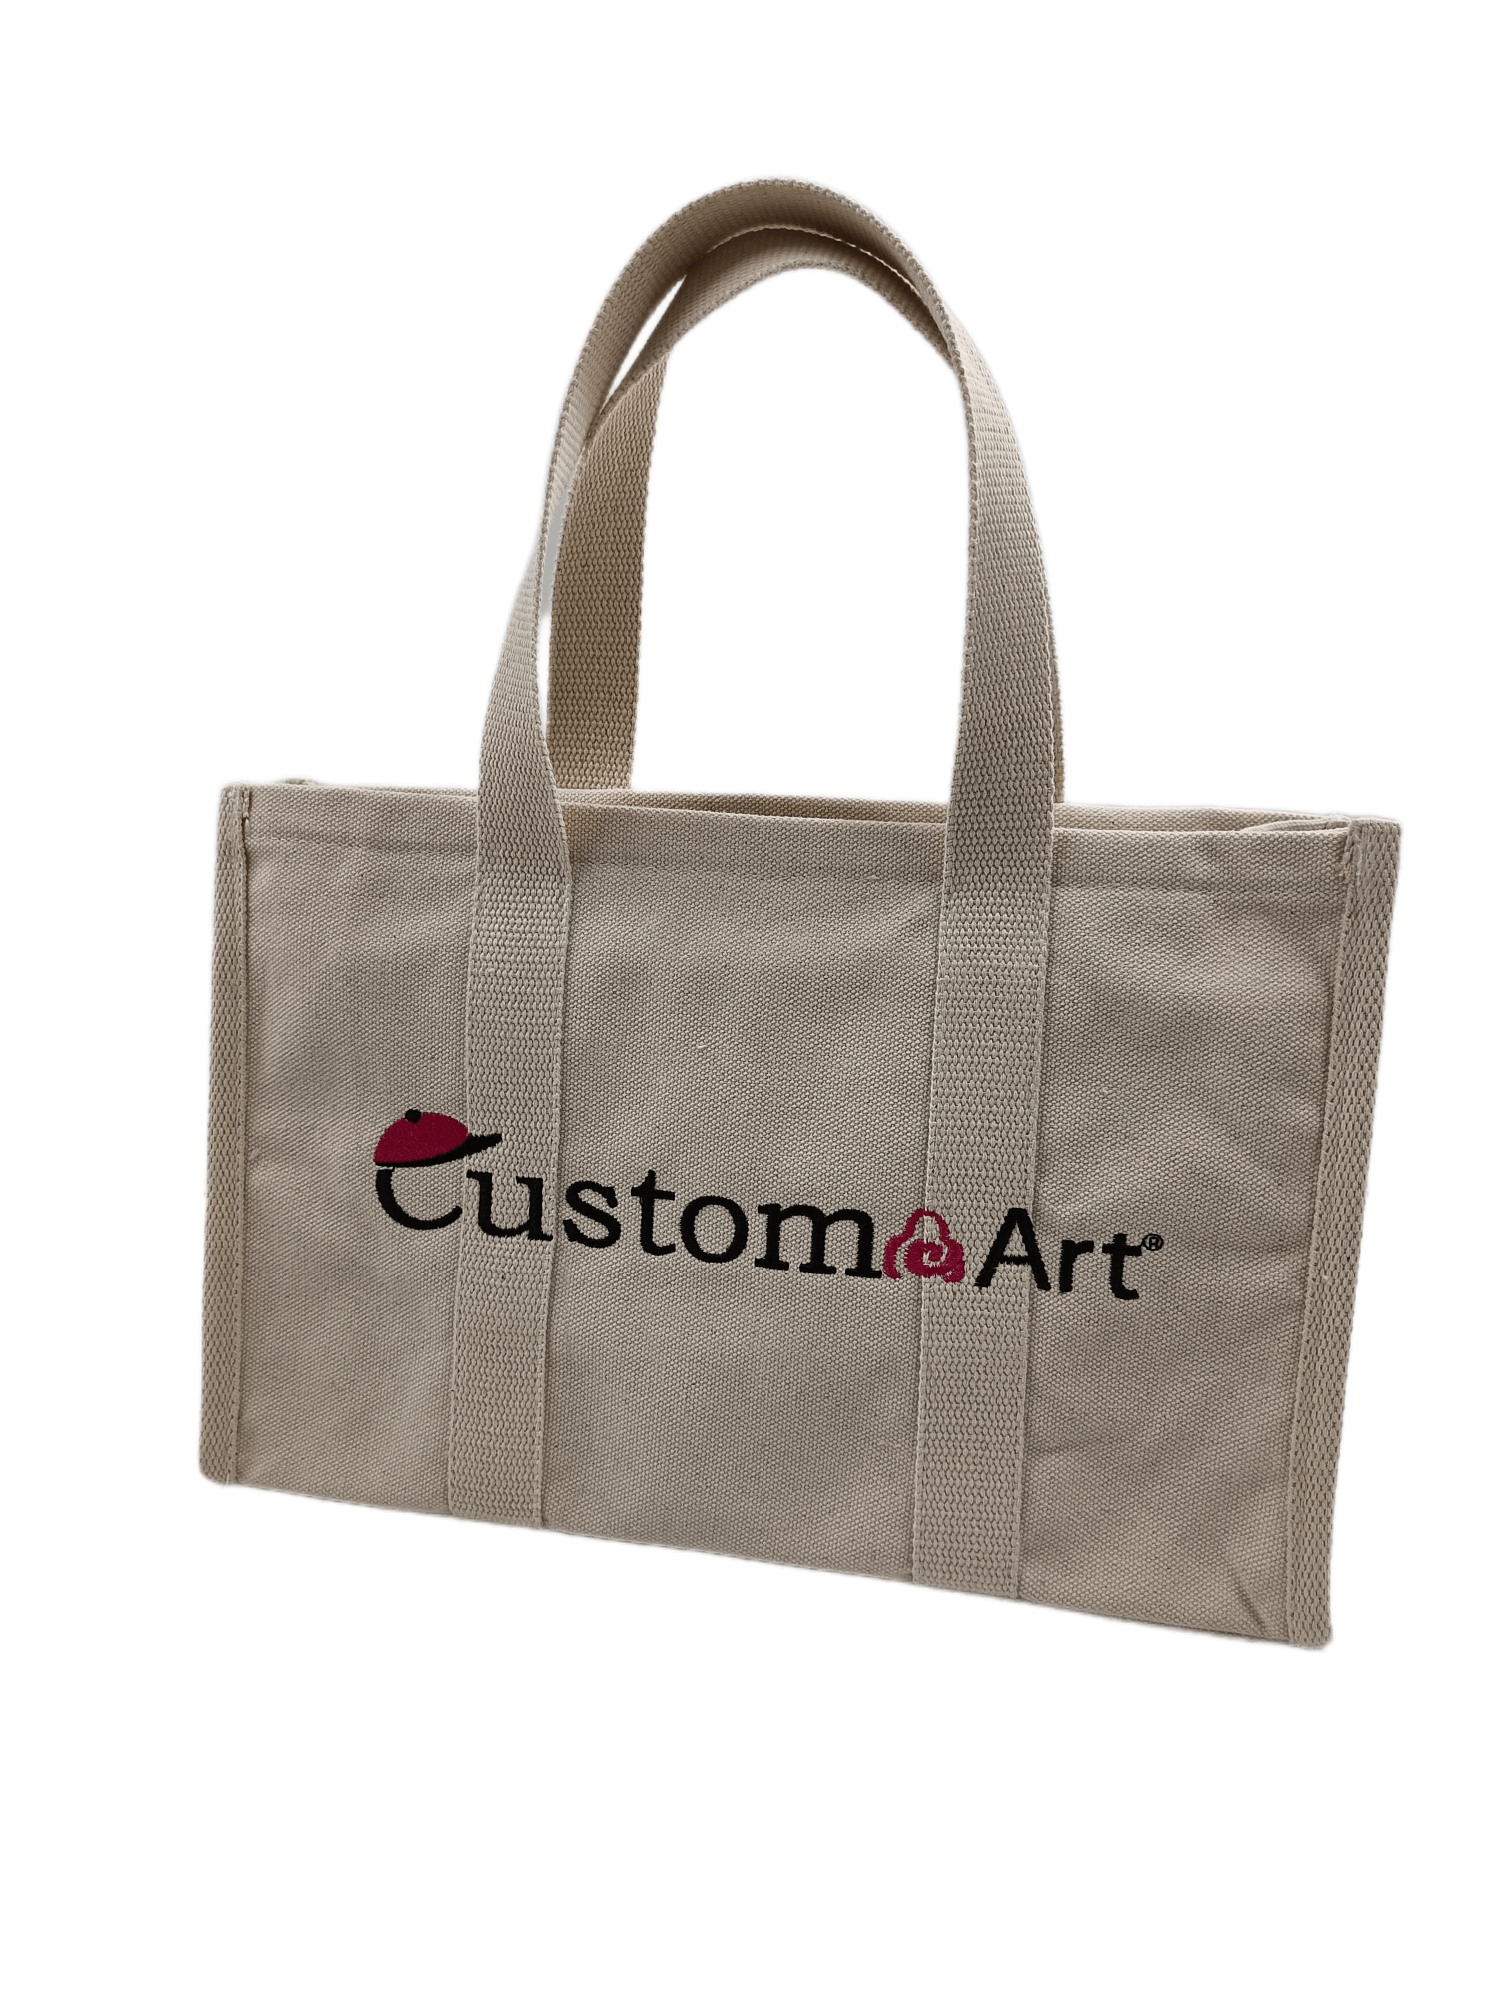 CUSTOM ART- #cosmeticbag #giftbag #canvasbagtote  product video